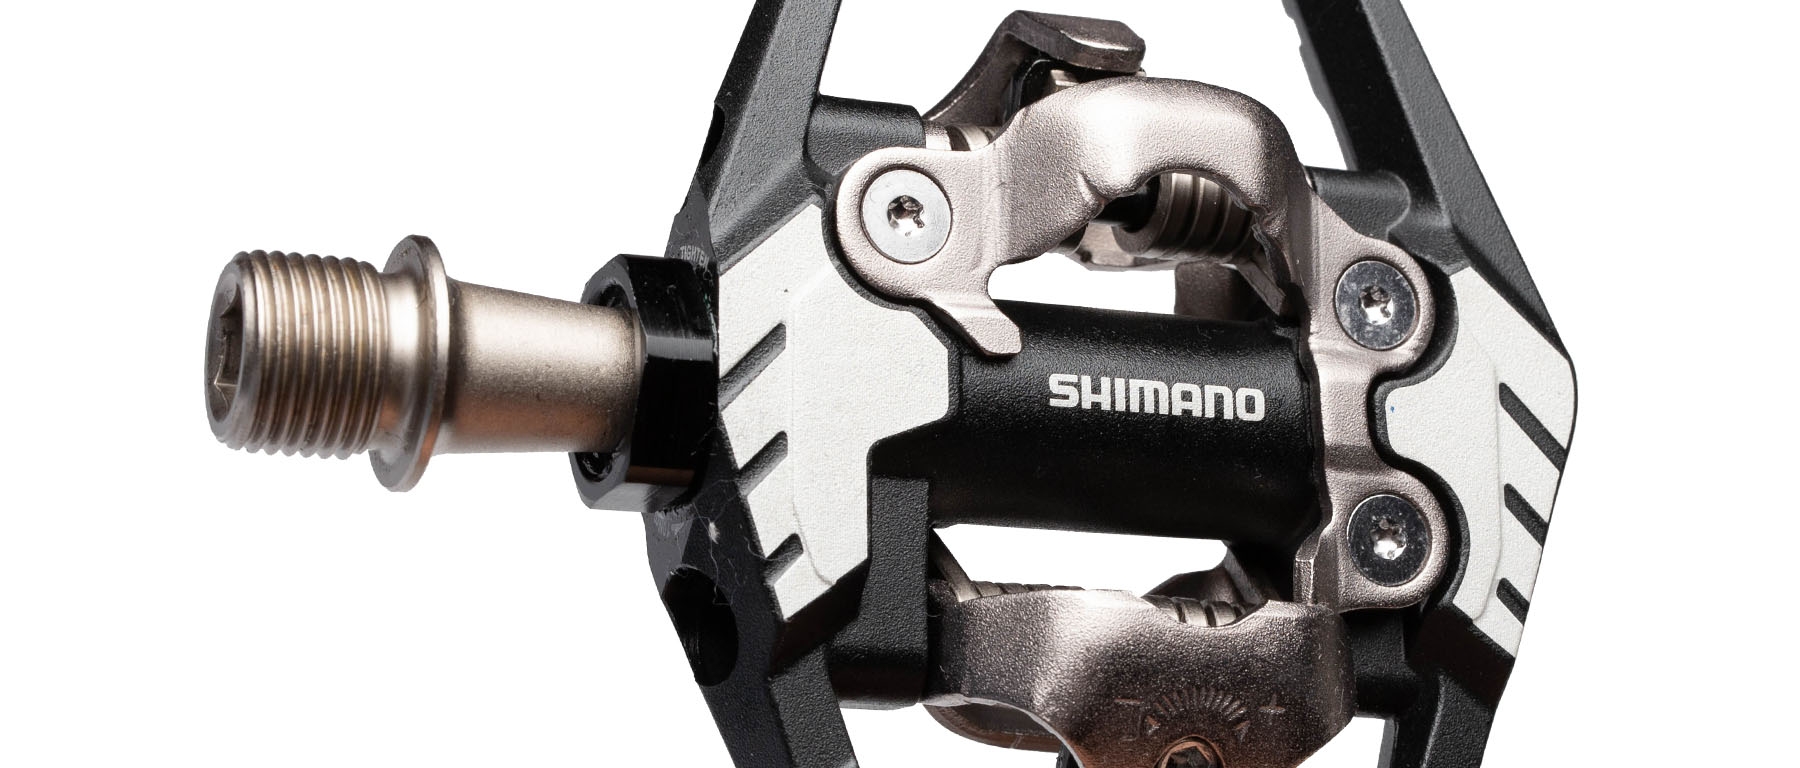 Shimano XT PD-M8120 SPD Pedals